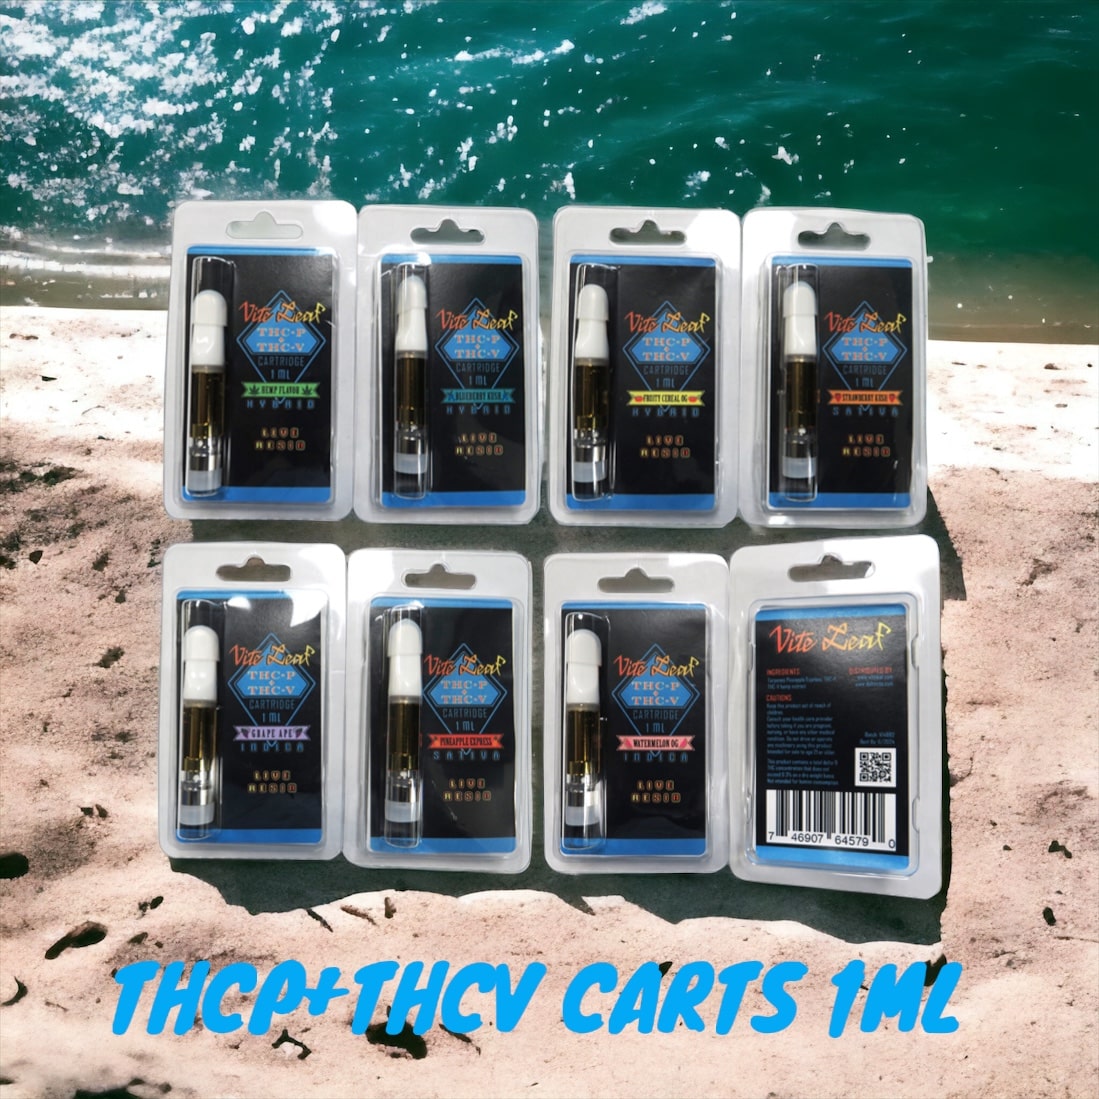 Thcp thcv carts